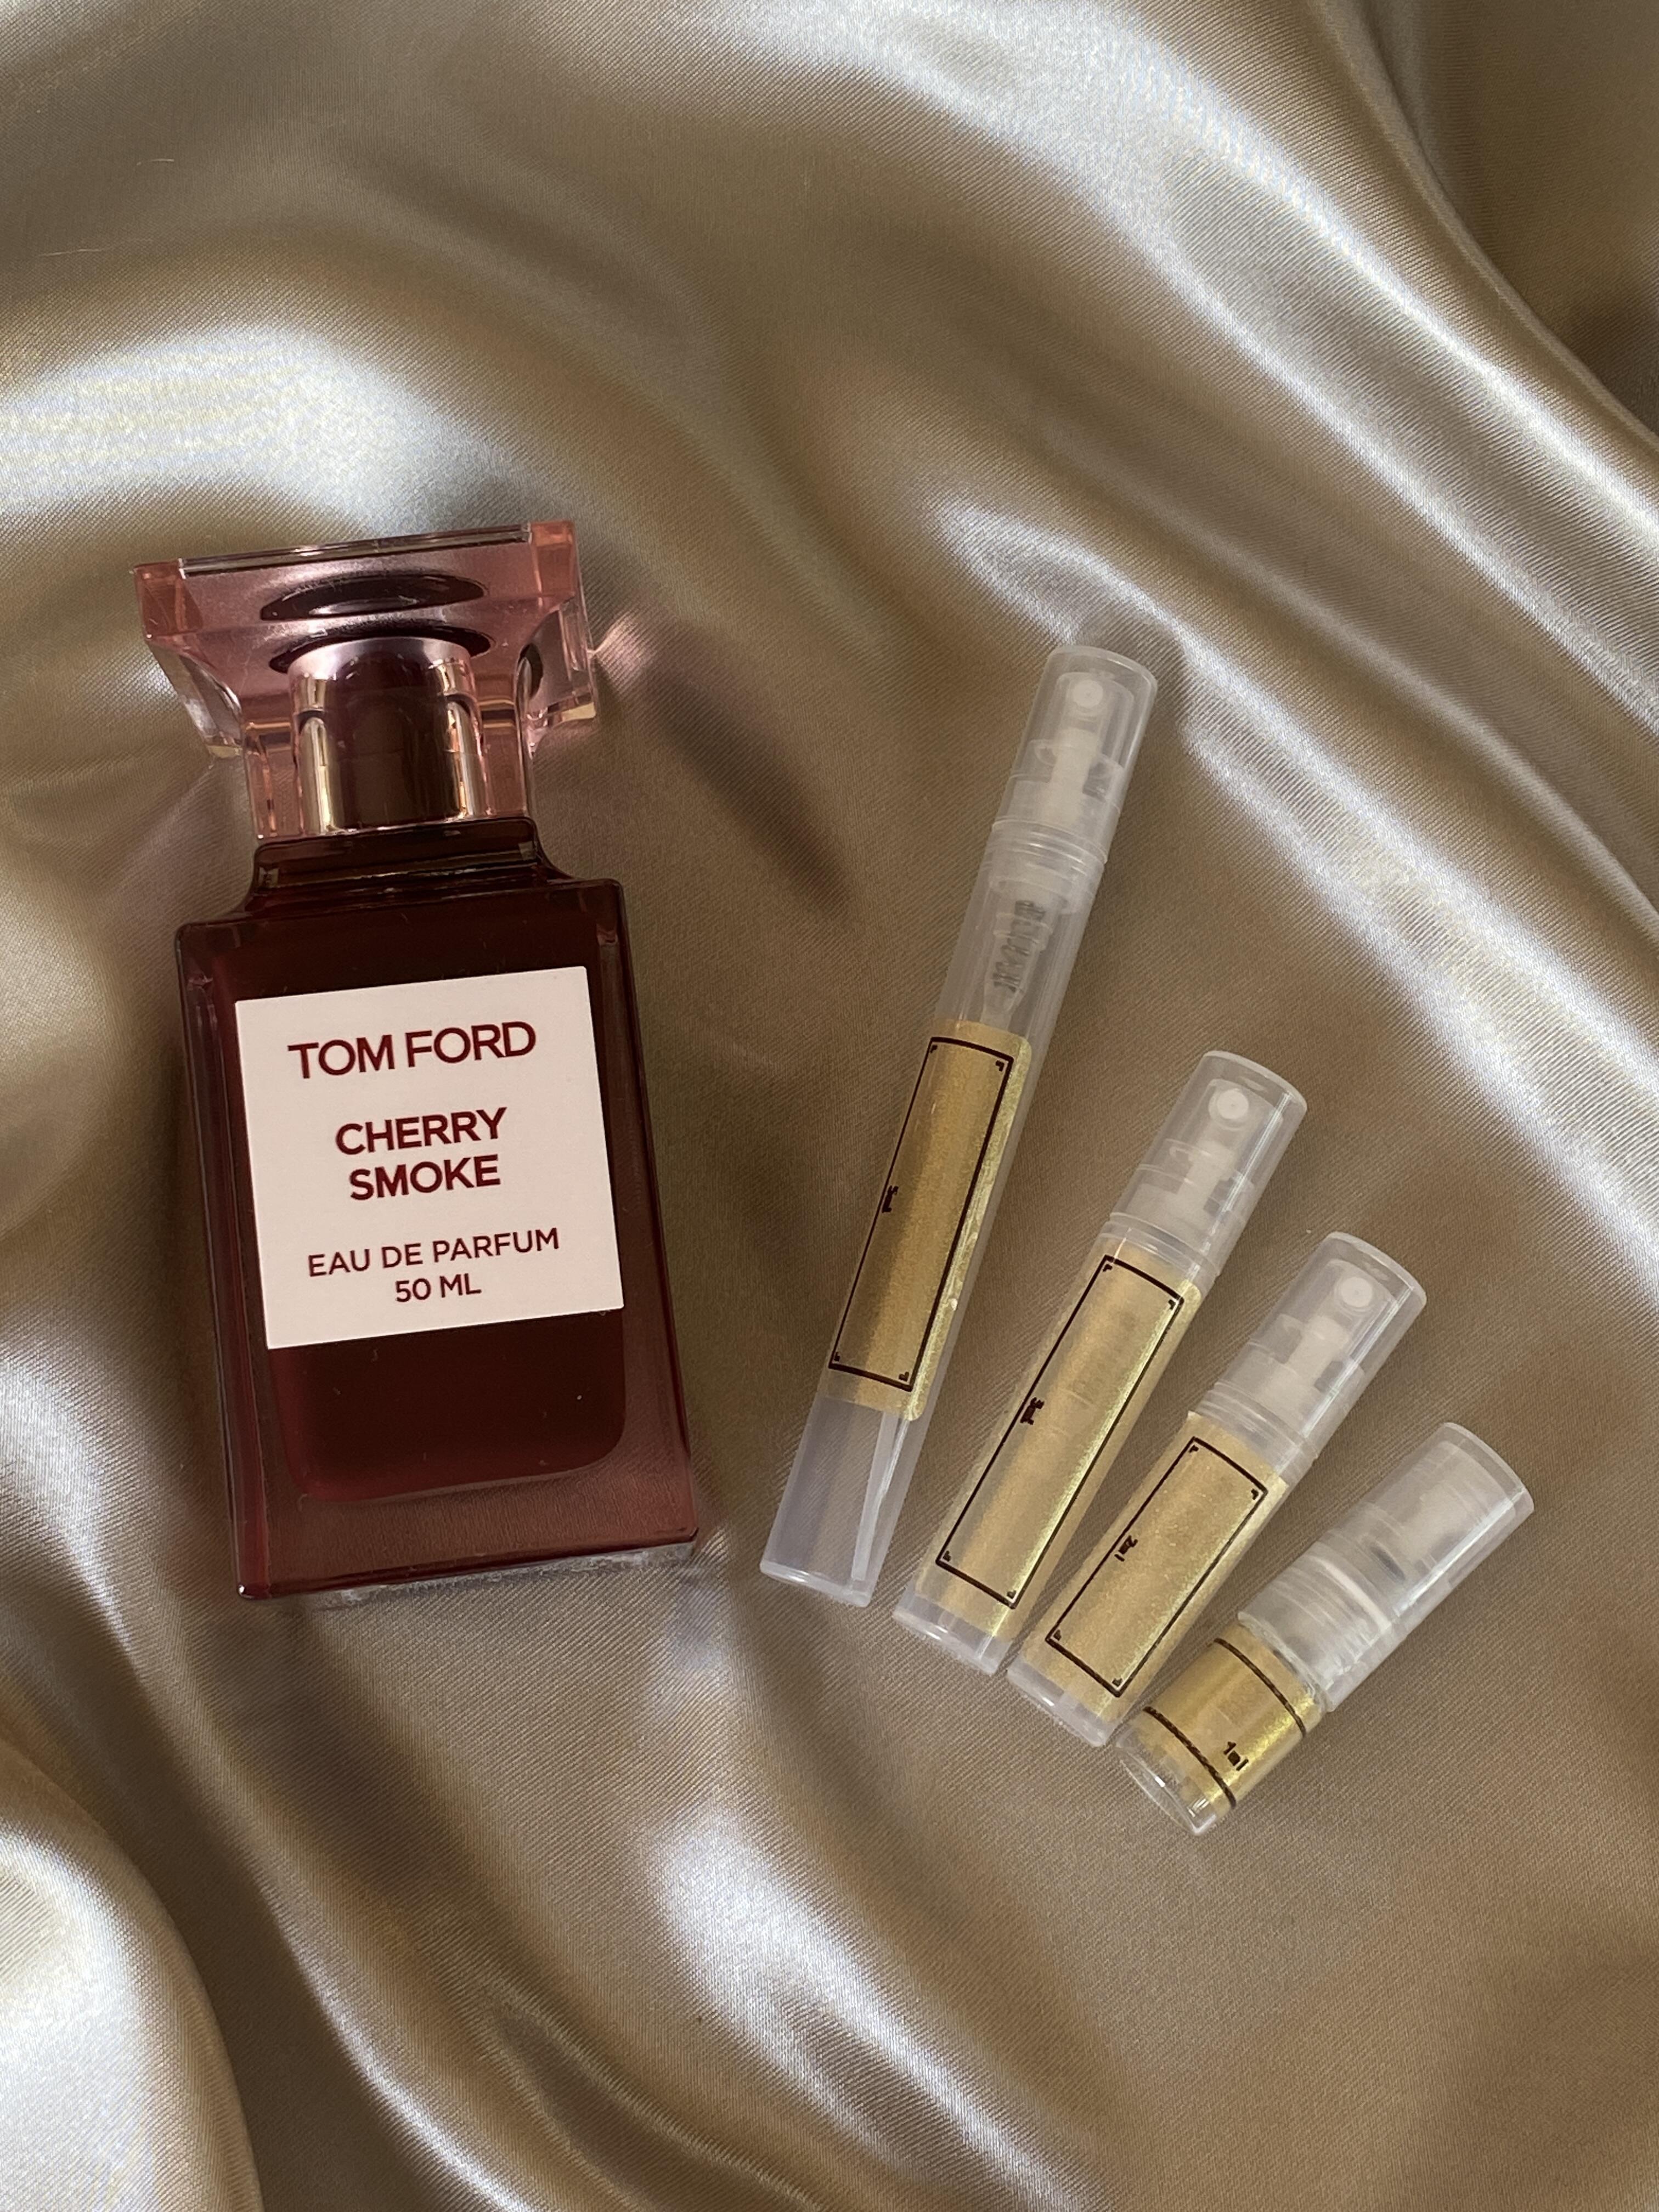 Tom Ford - Cherry Smoke - Fragrance Samples